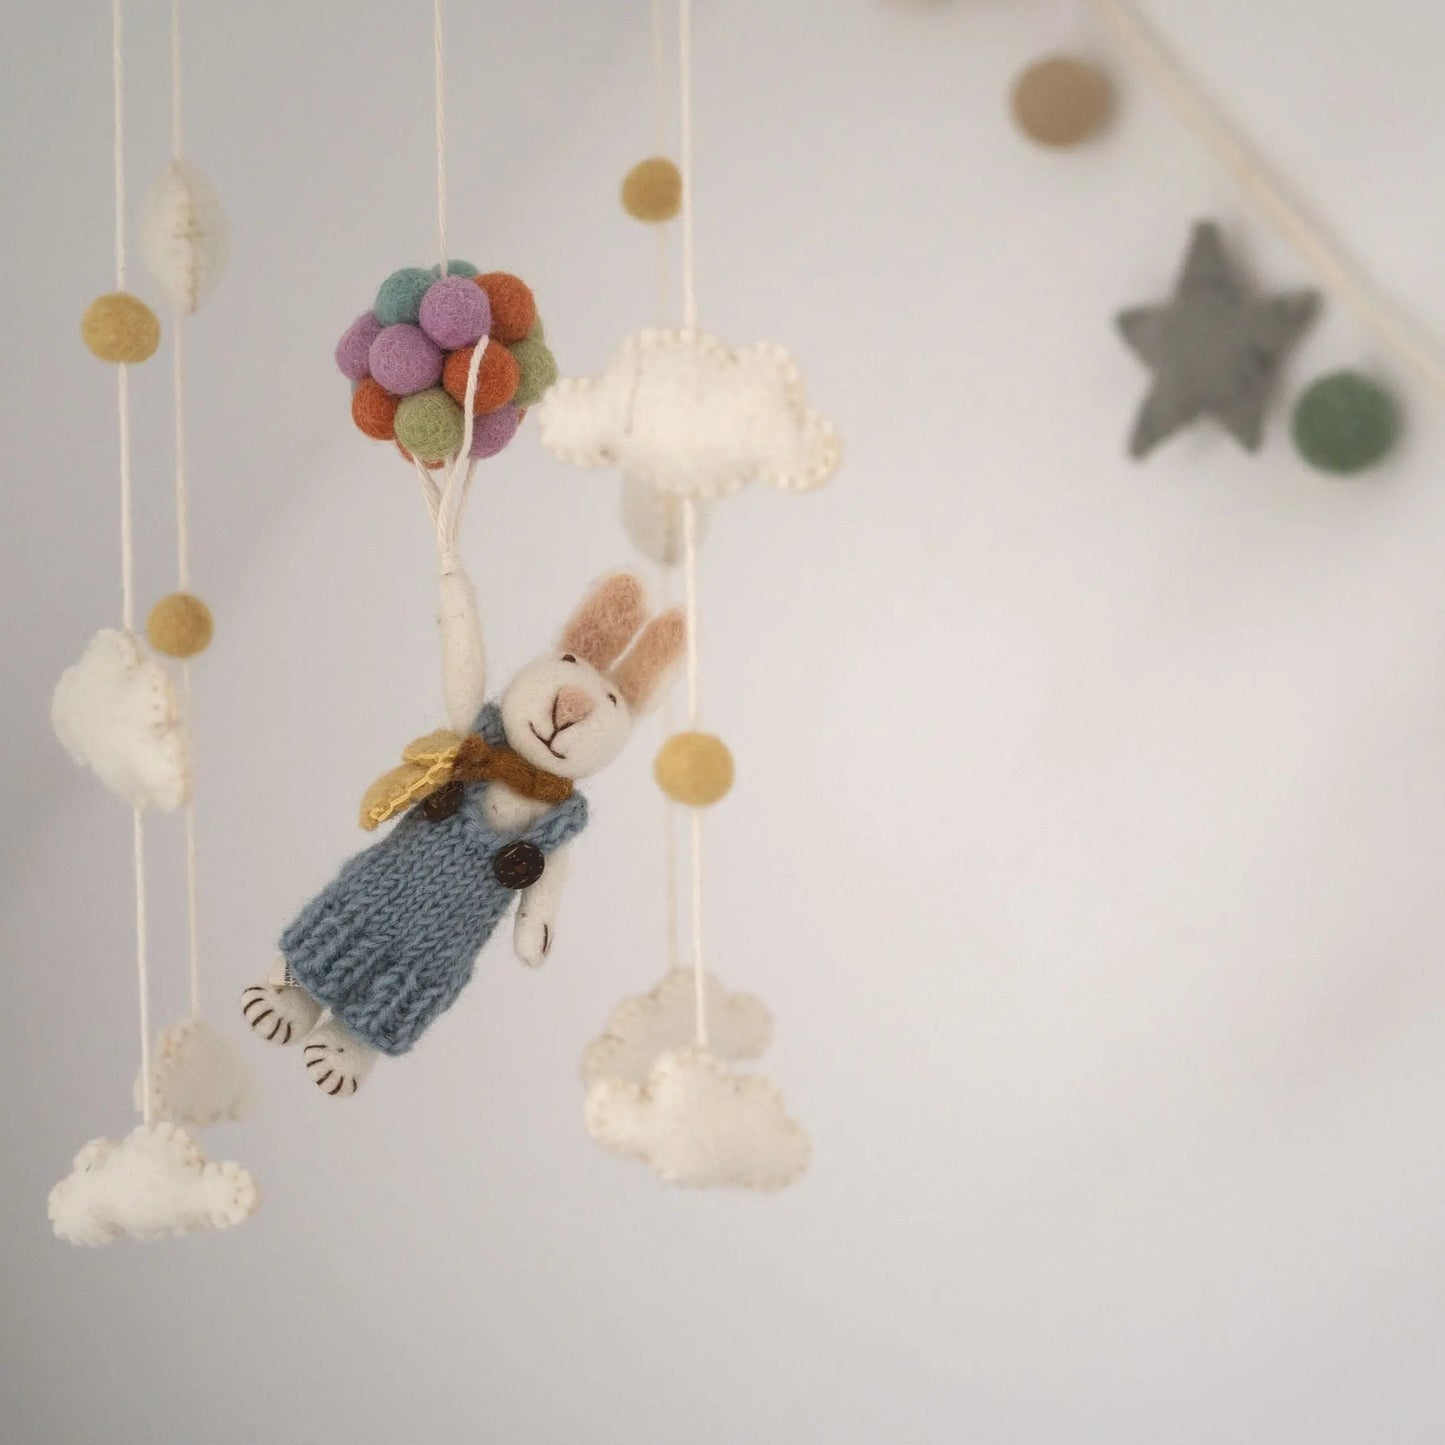 Filzlig Luftballons Baby Mobile  Gry & Sif  Inspirationsbild